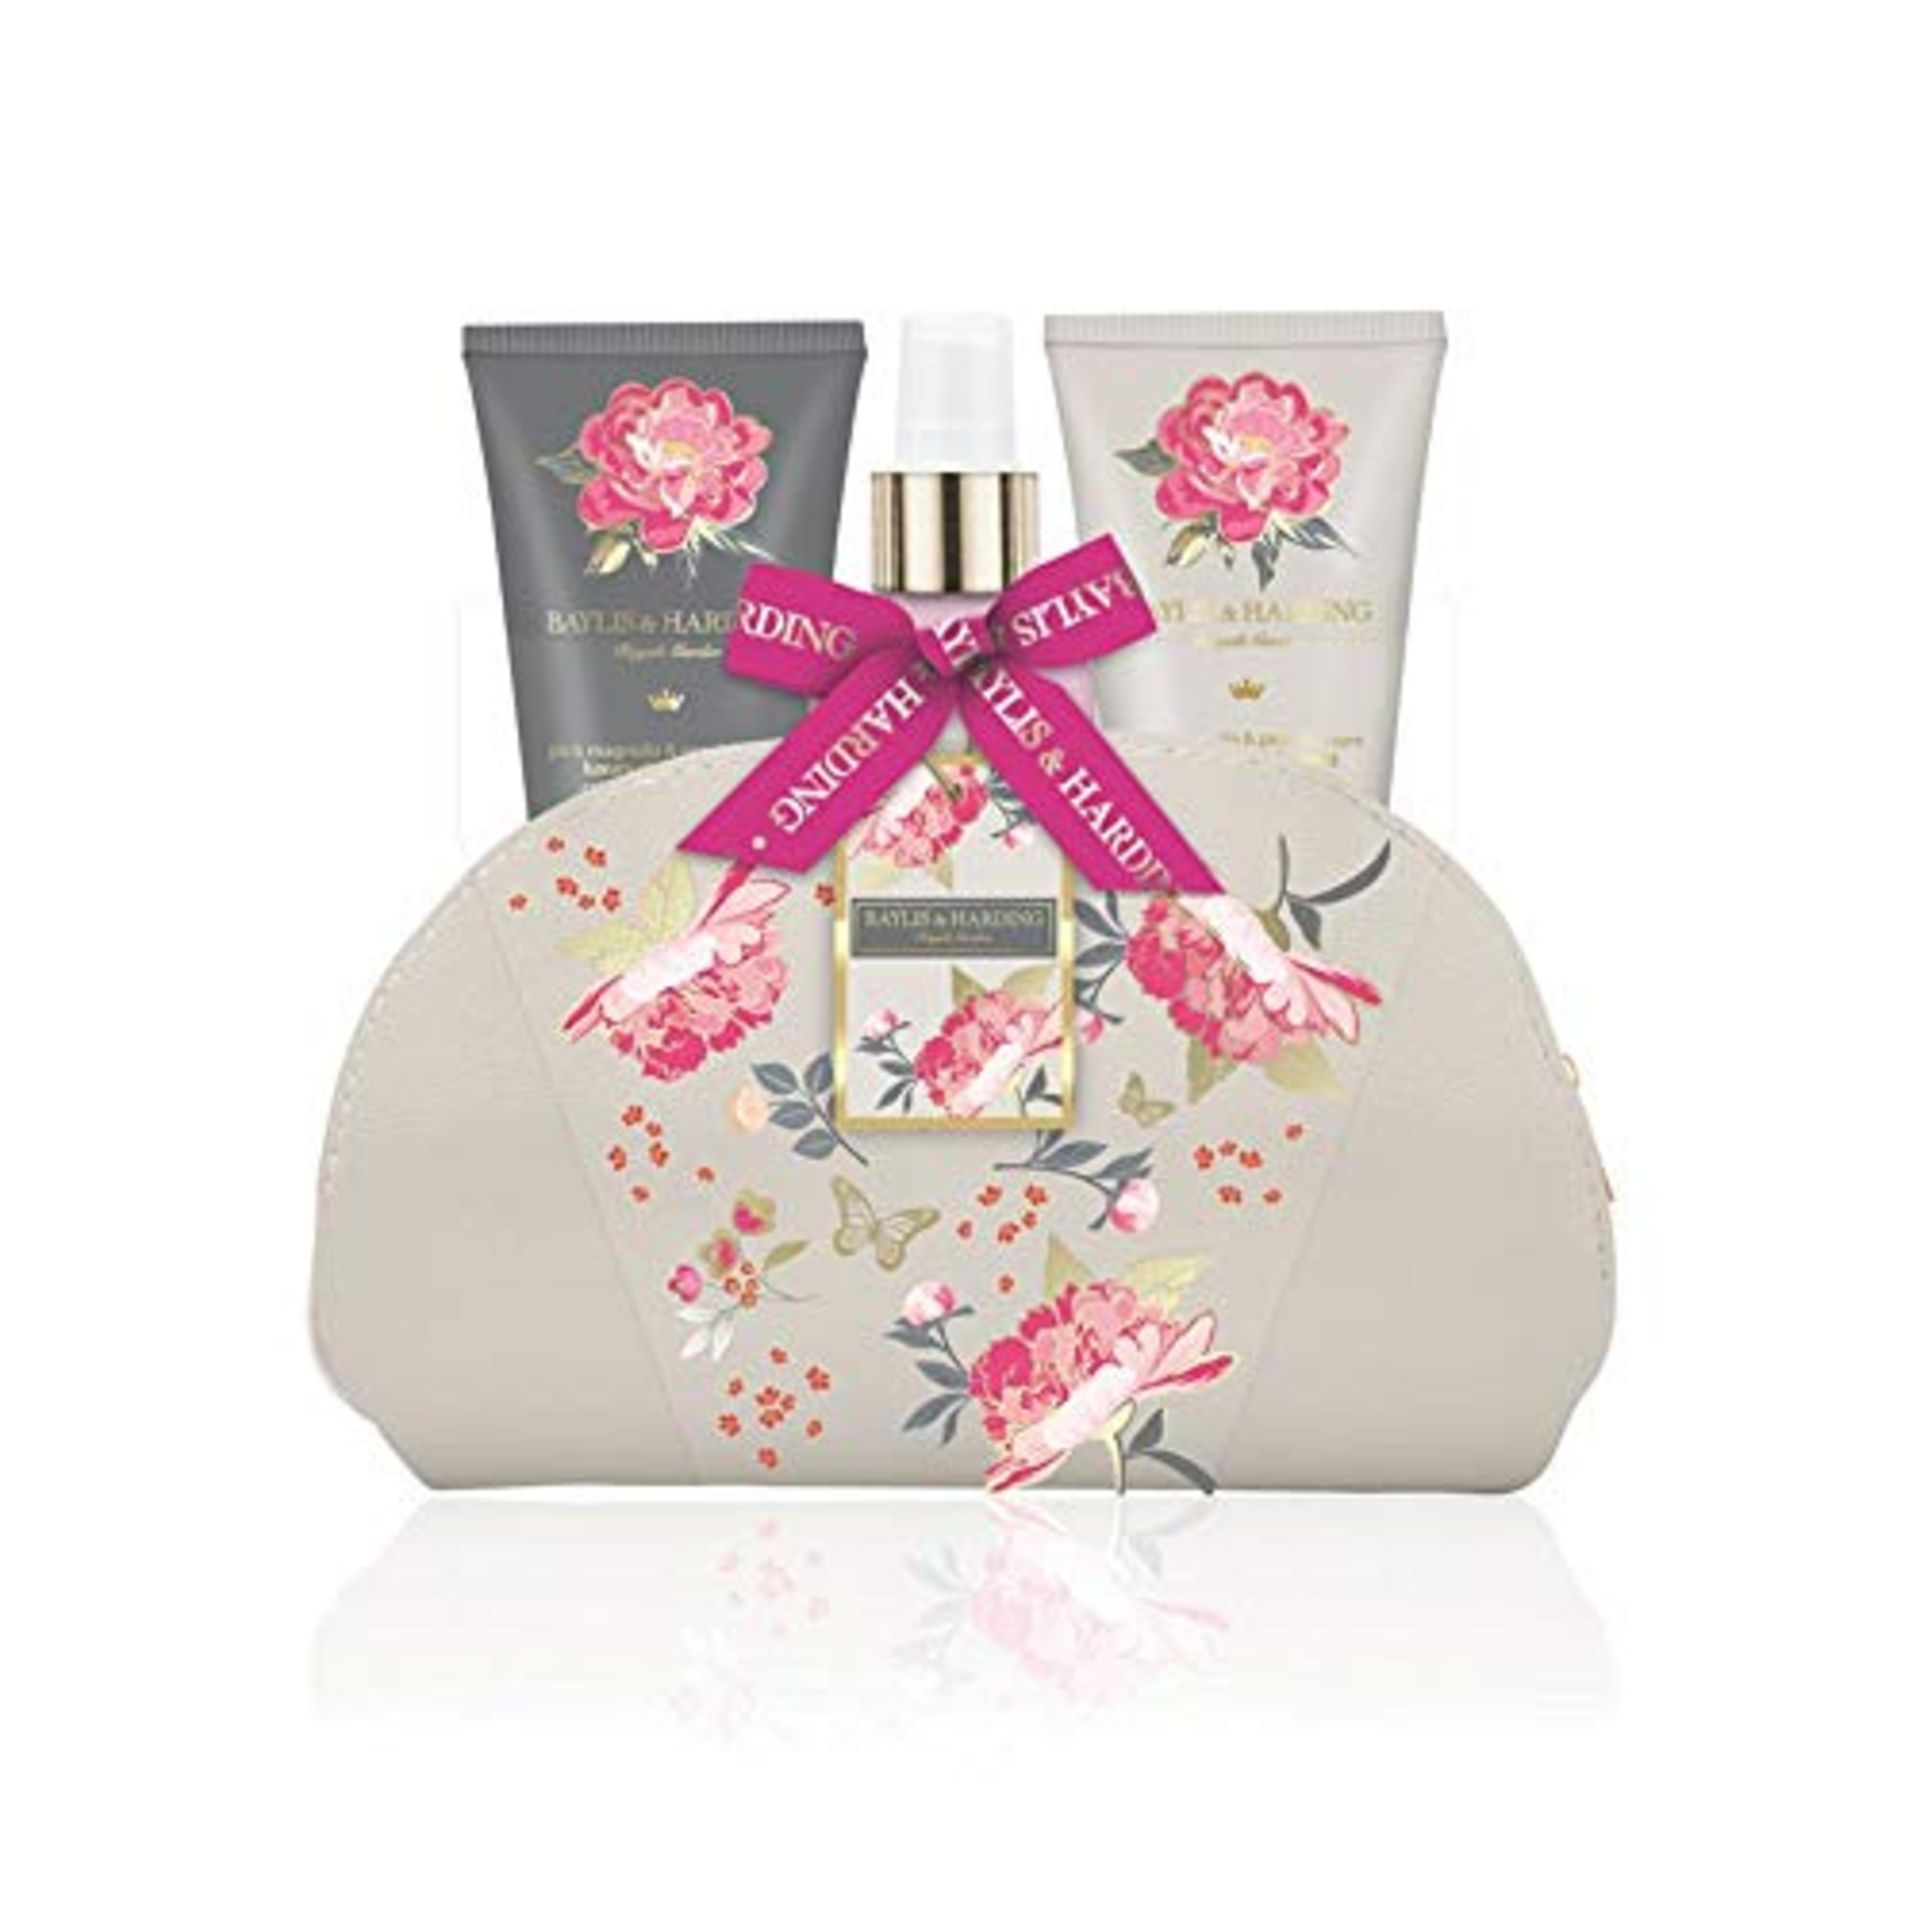 V Brand New Baylis & Harding Royal Garden Pink Magnolia & Pear Blossom Bag Set Inc Hand & Body